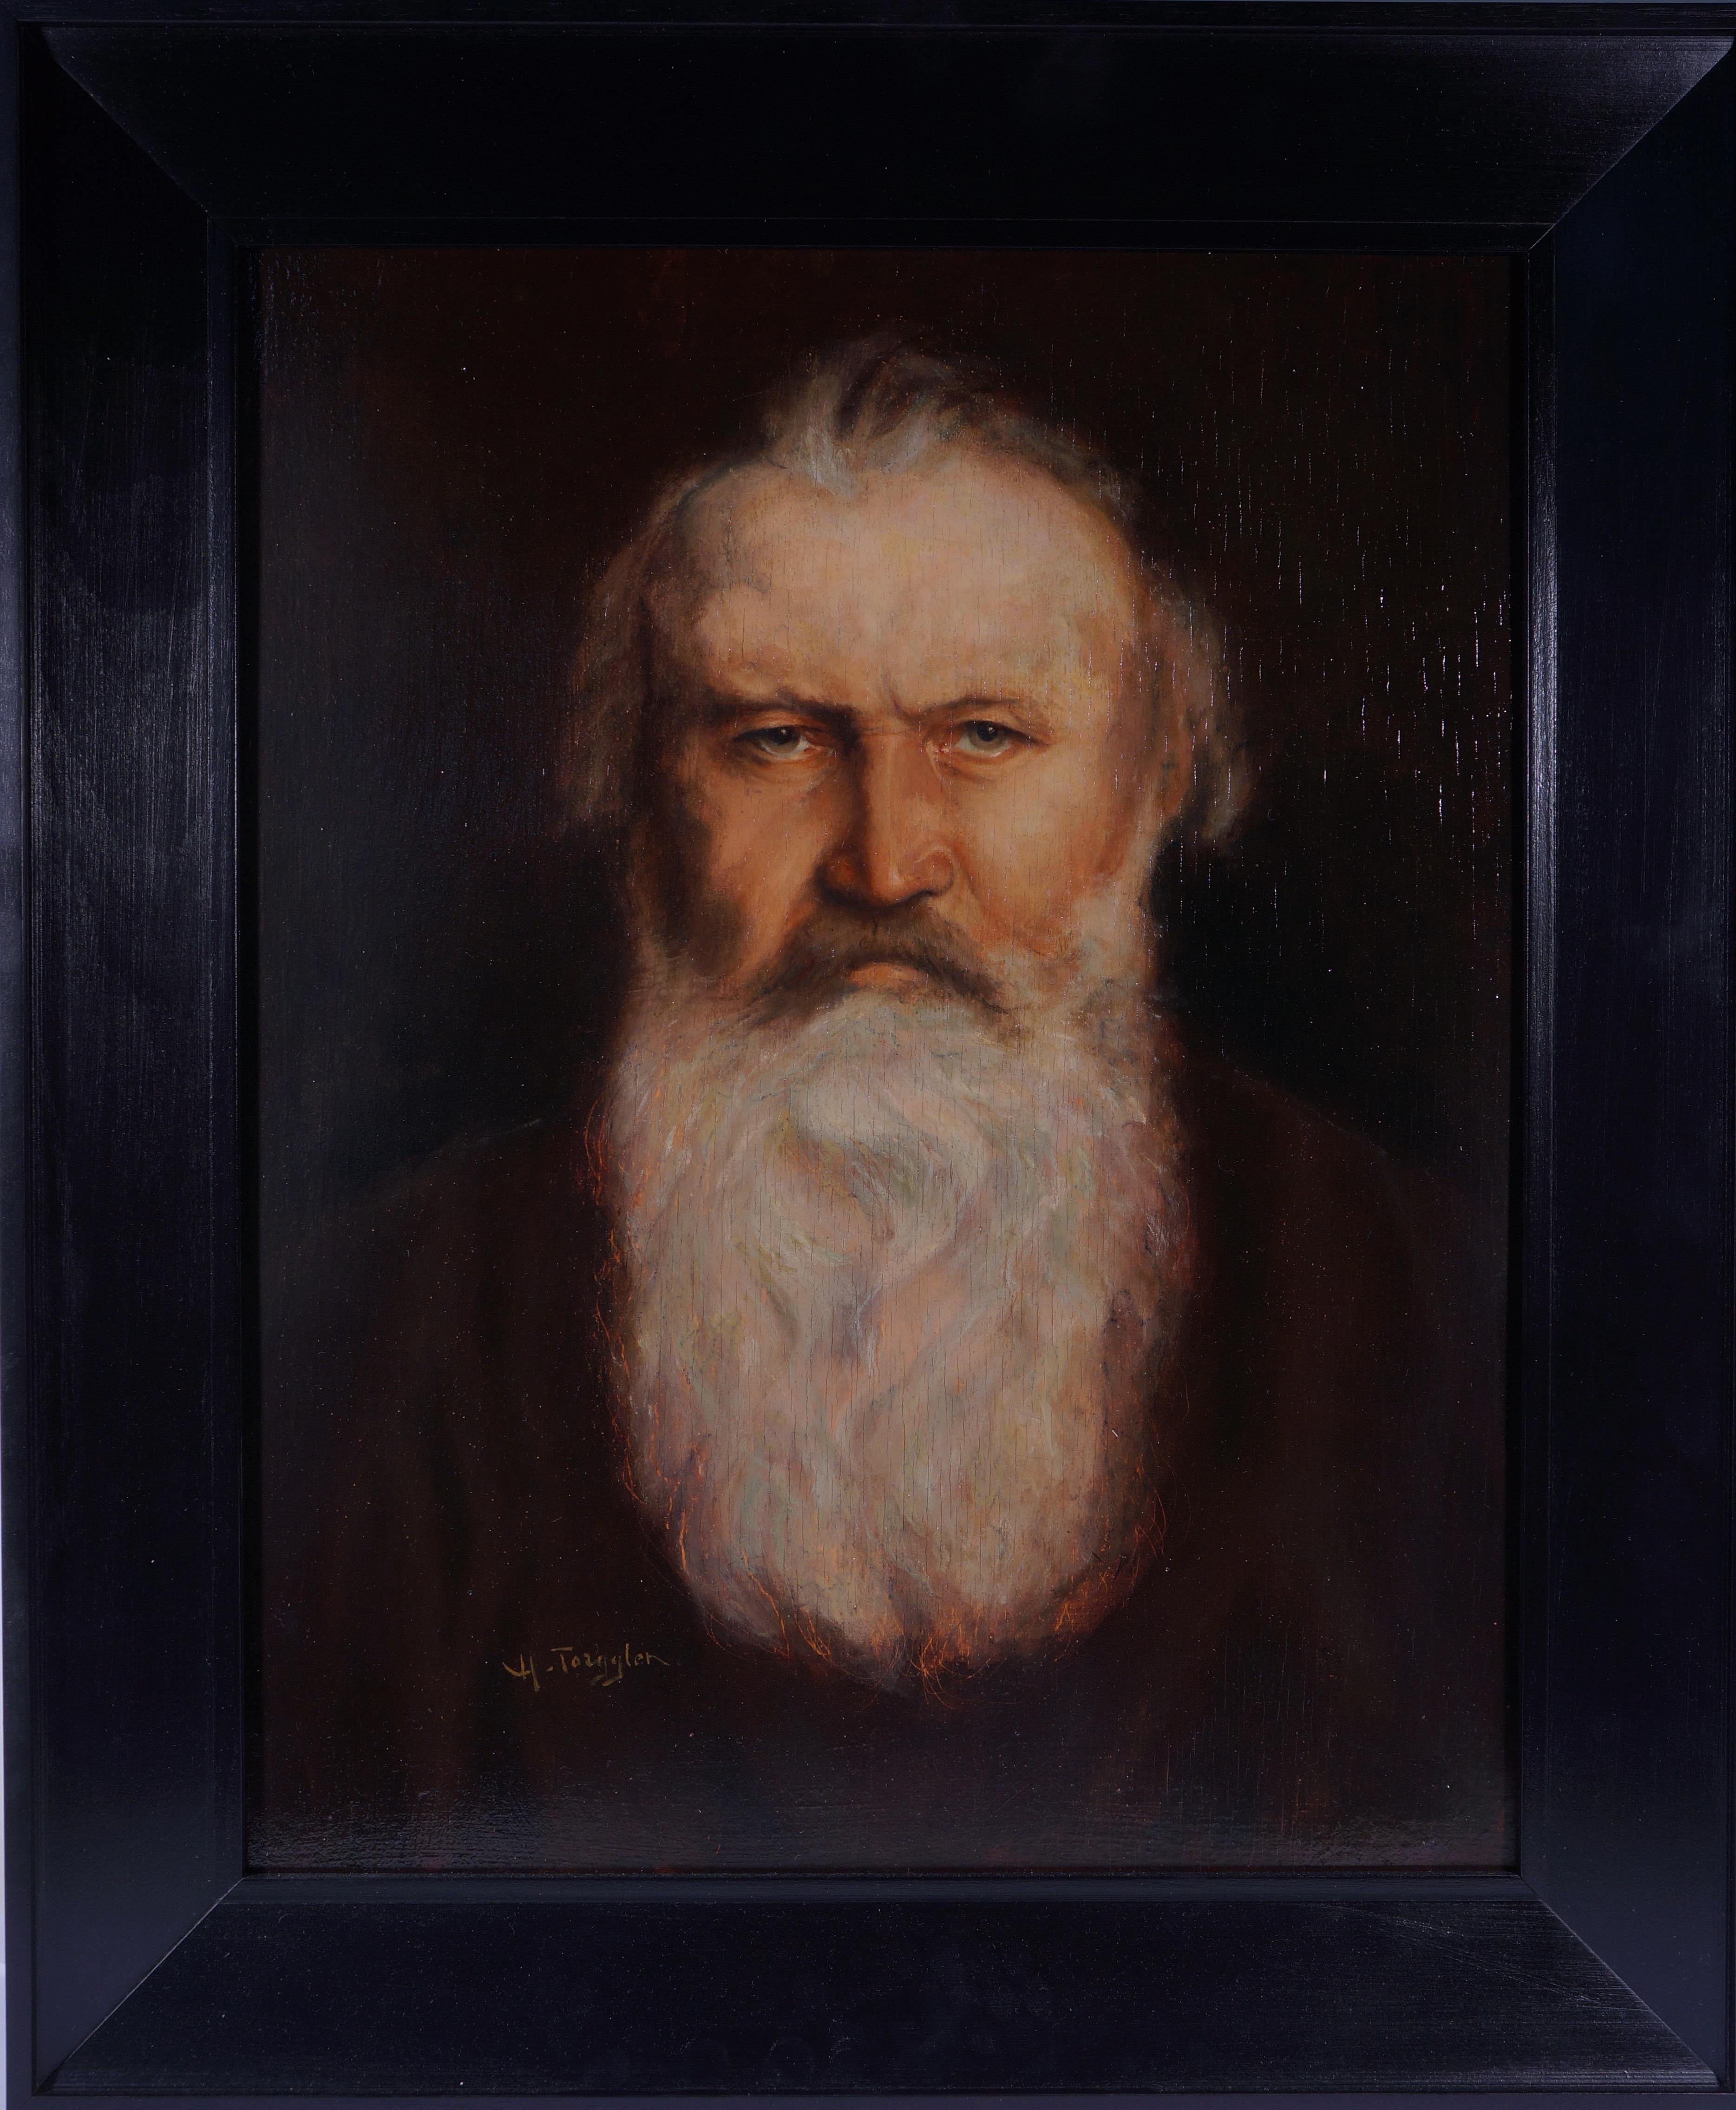 Hermann Torggler Portrait Painting - Portrait of Johannes Brahms, before 1939